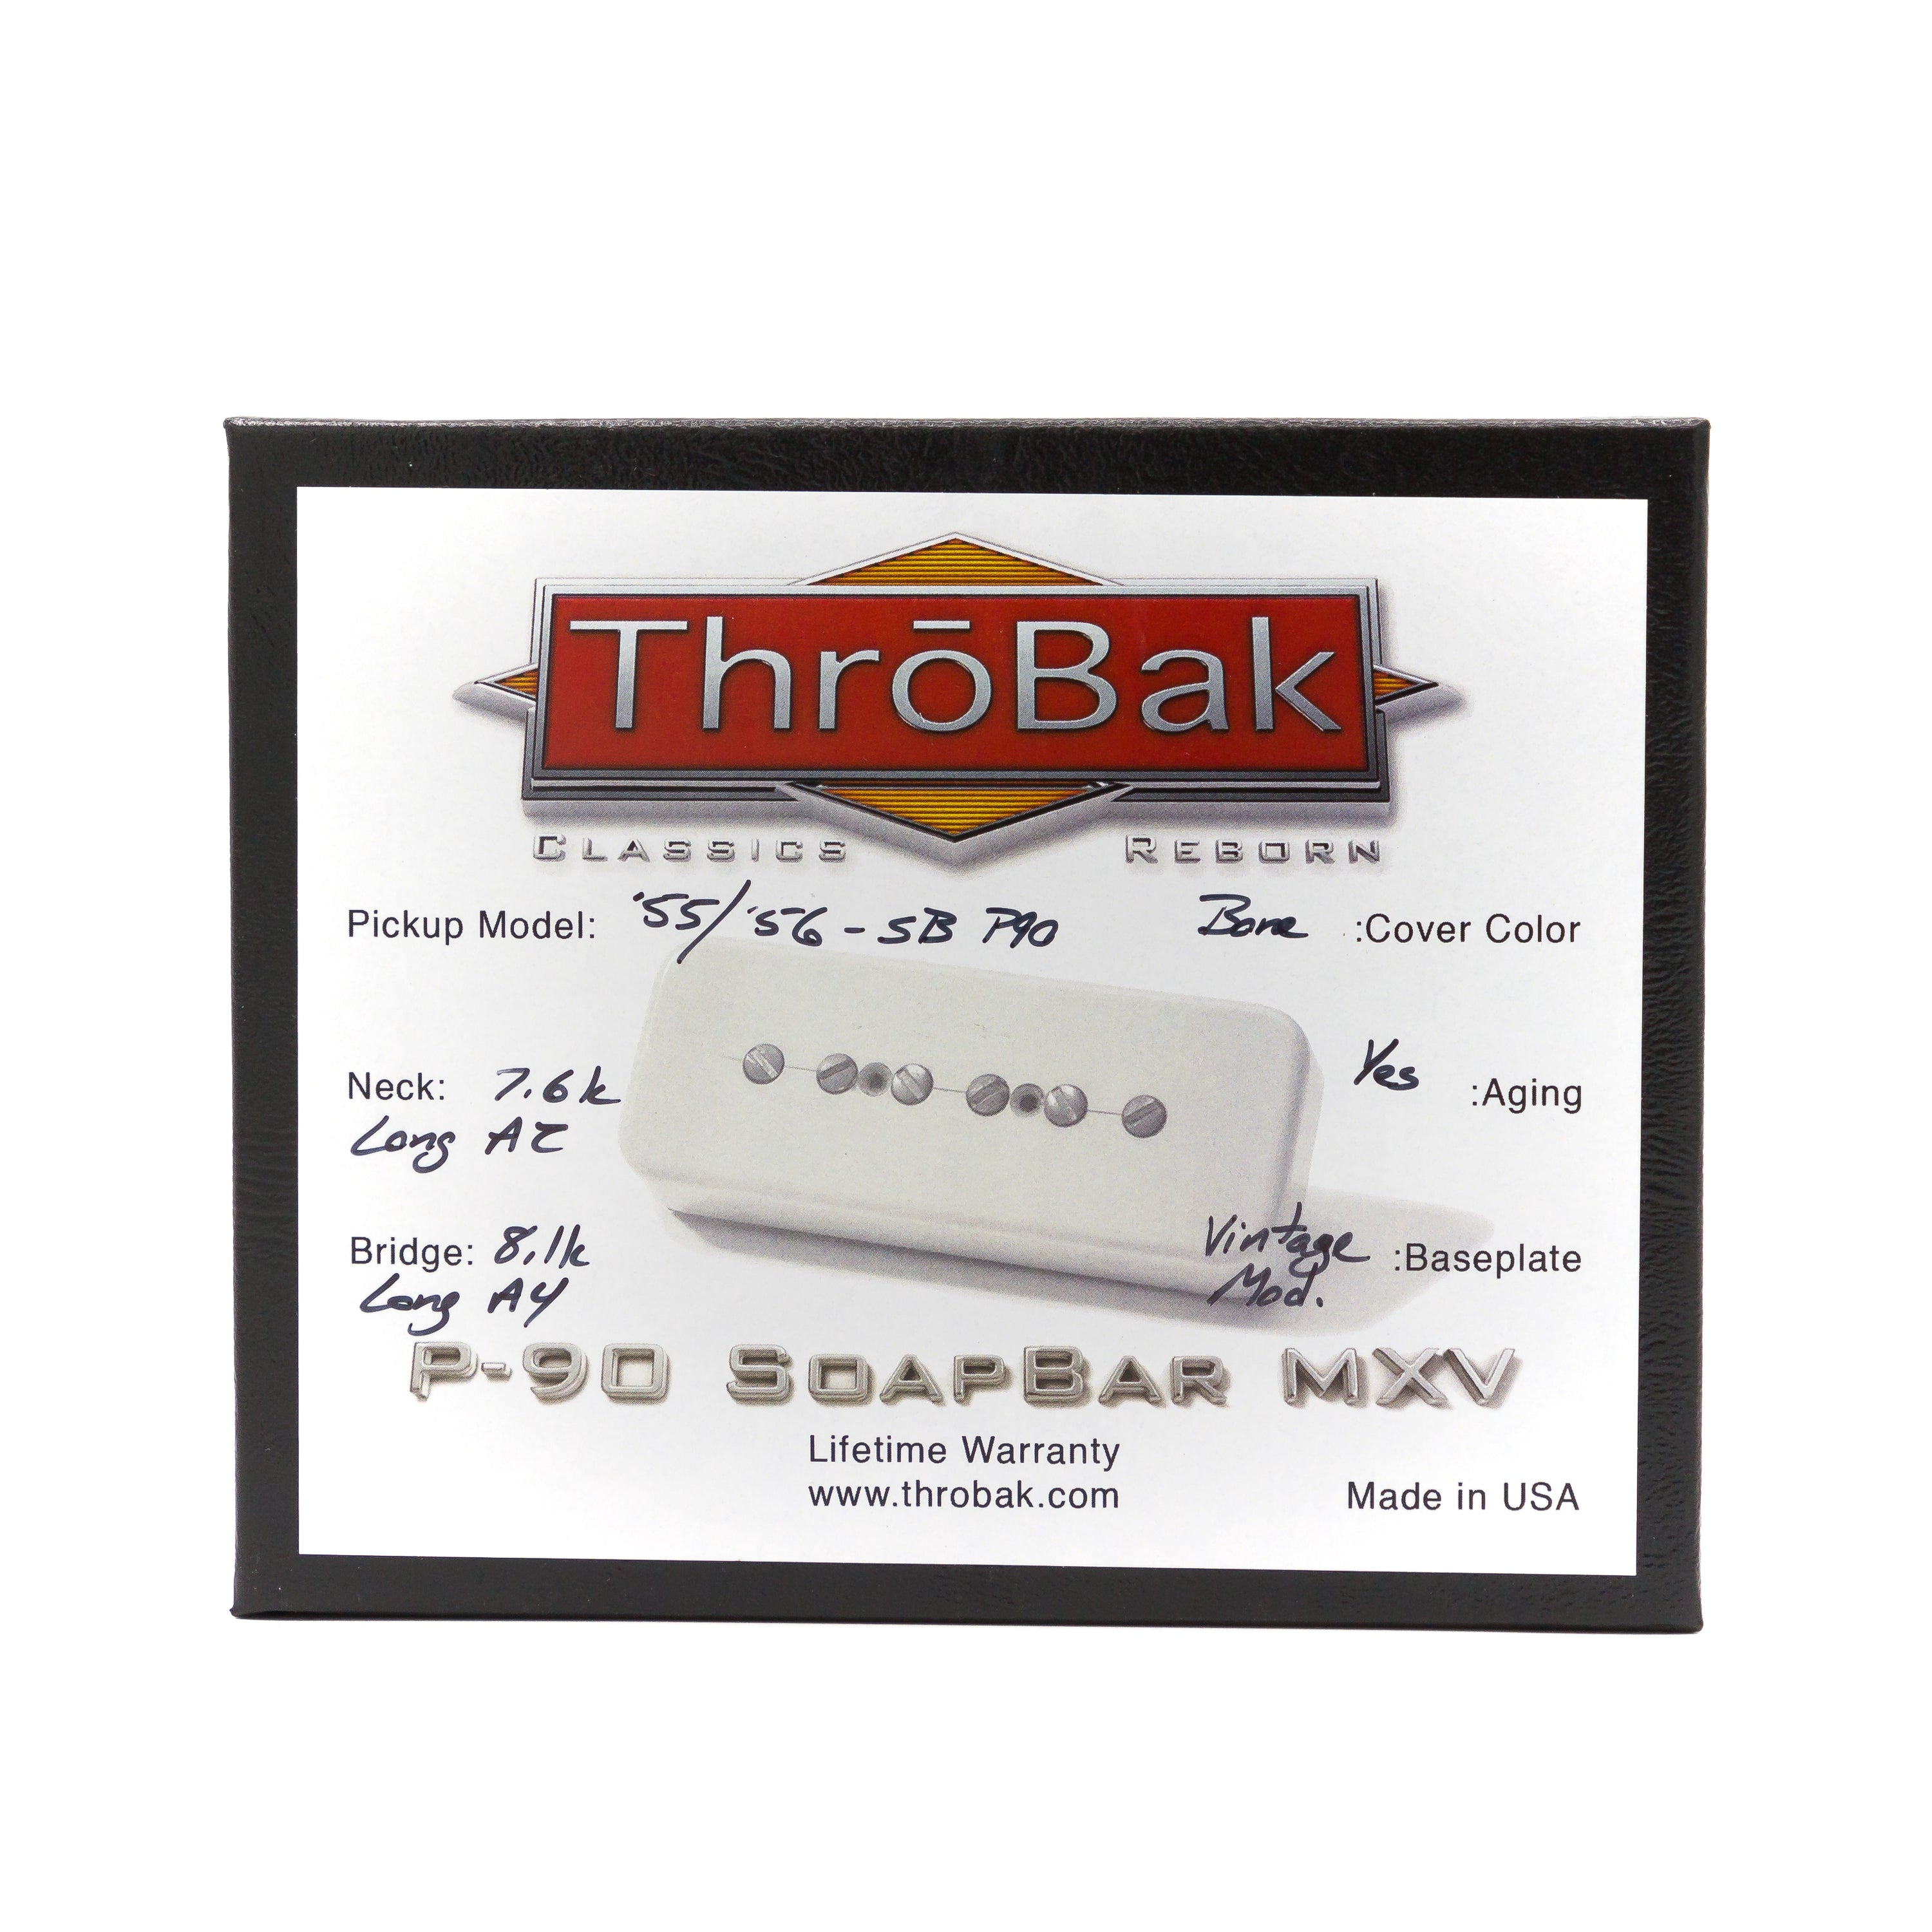 ThroBak Pickups - ’55/’56-SB P90 MXV Set - Aged